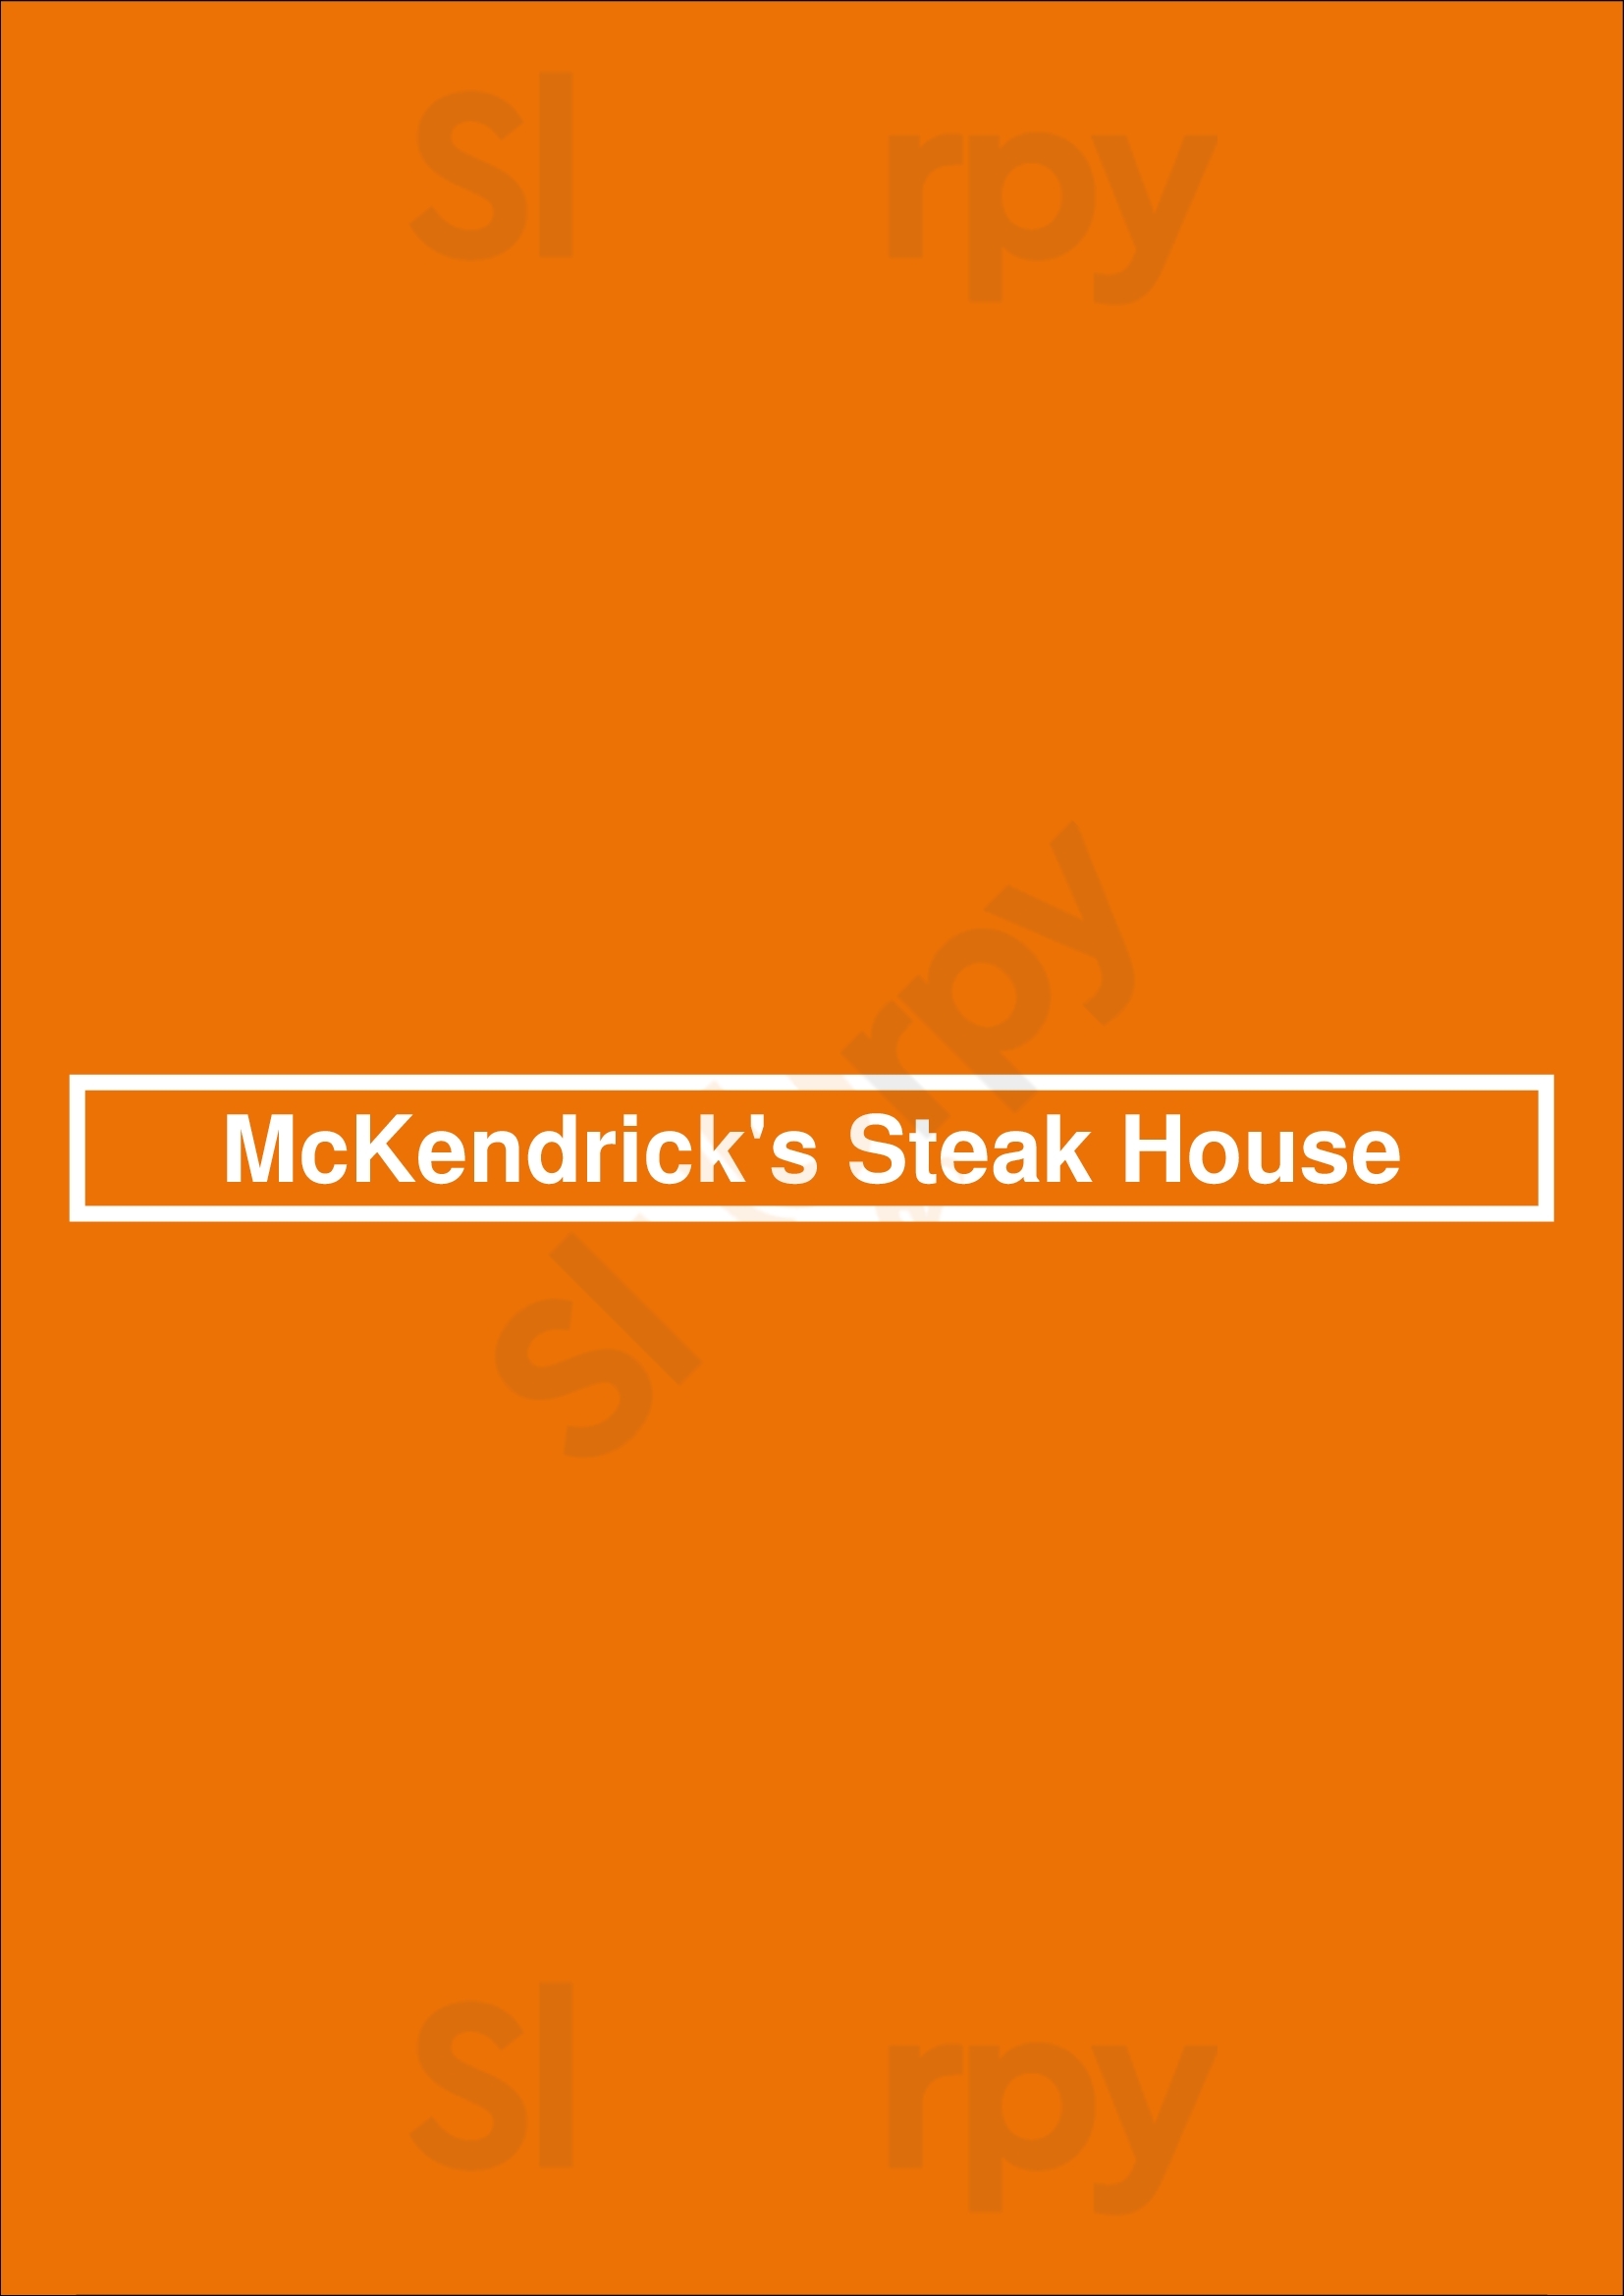 Mckendrick's Steak House Atlanta Menu - 1